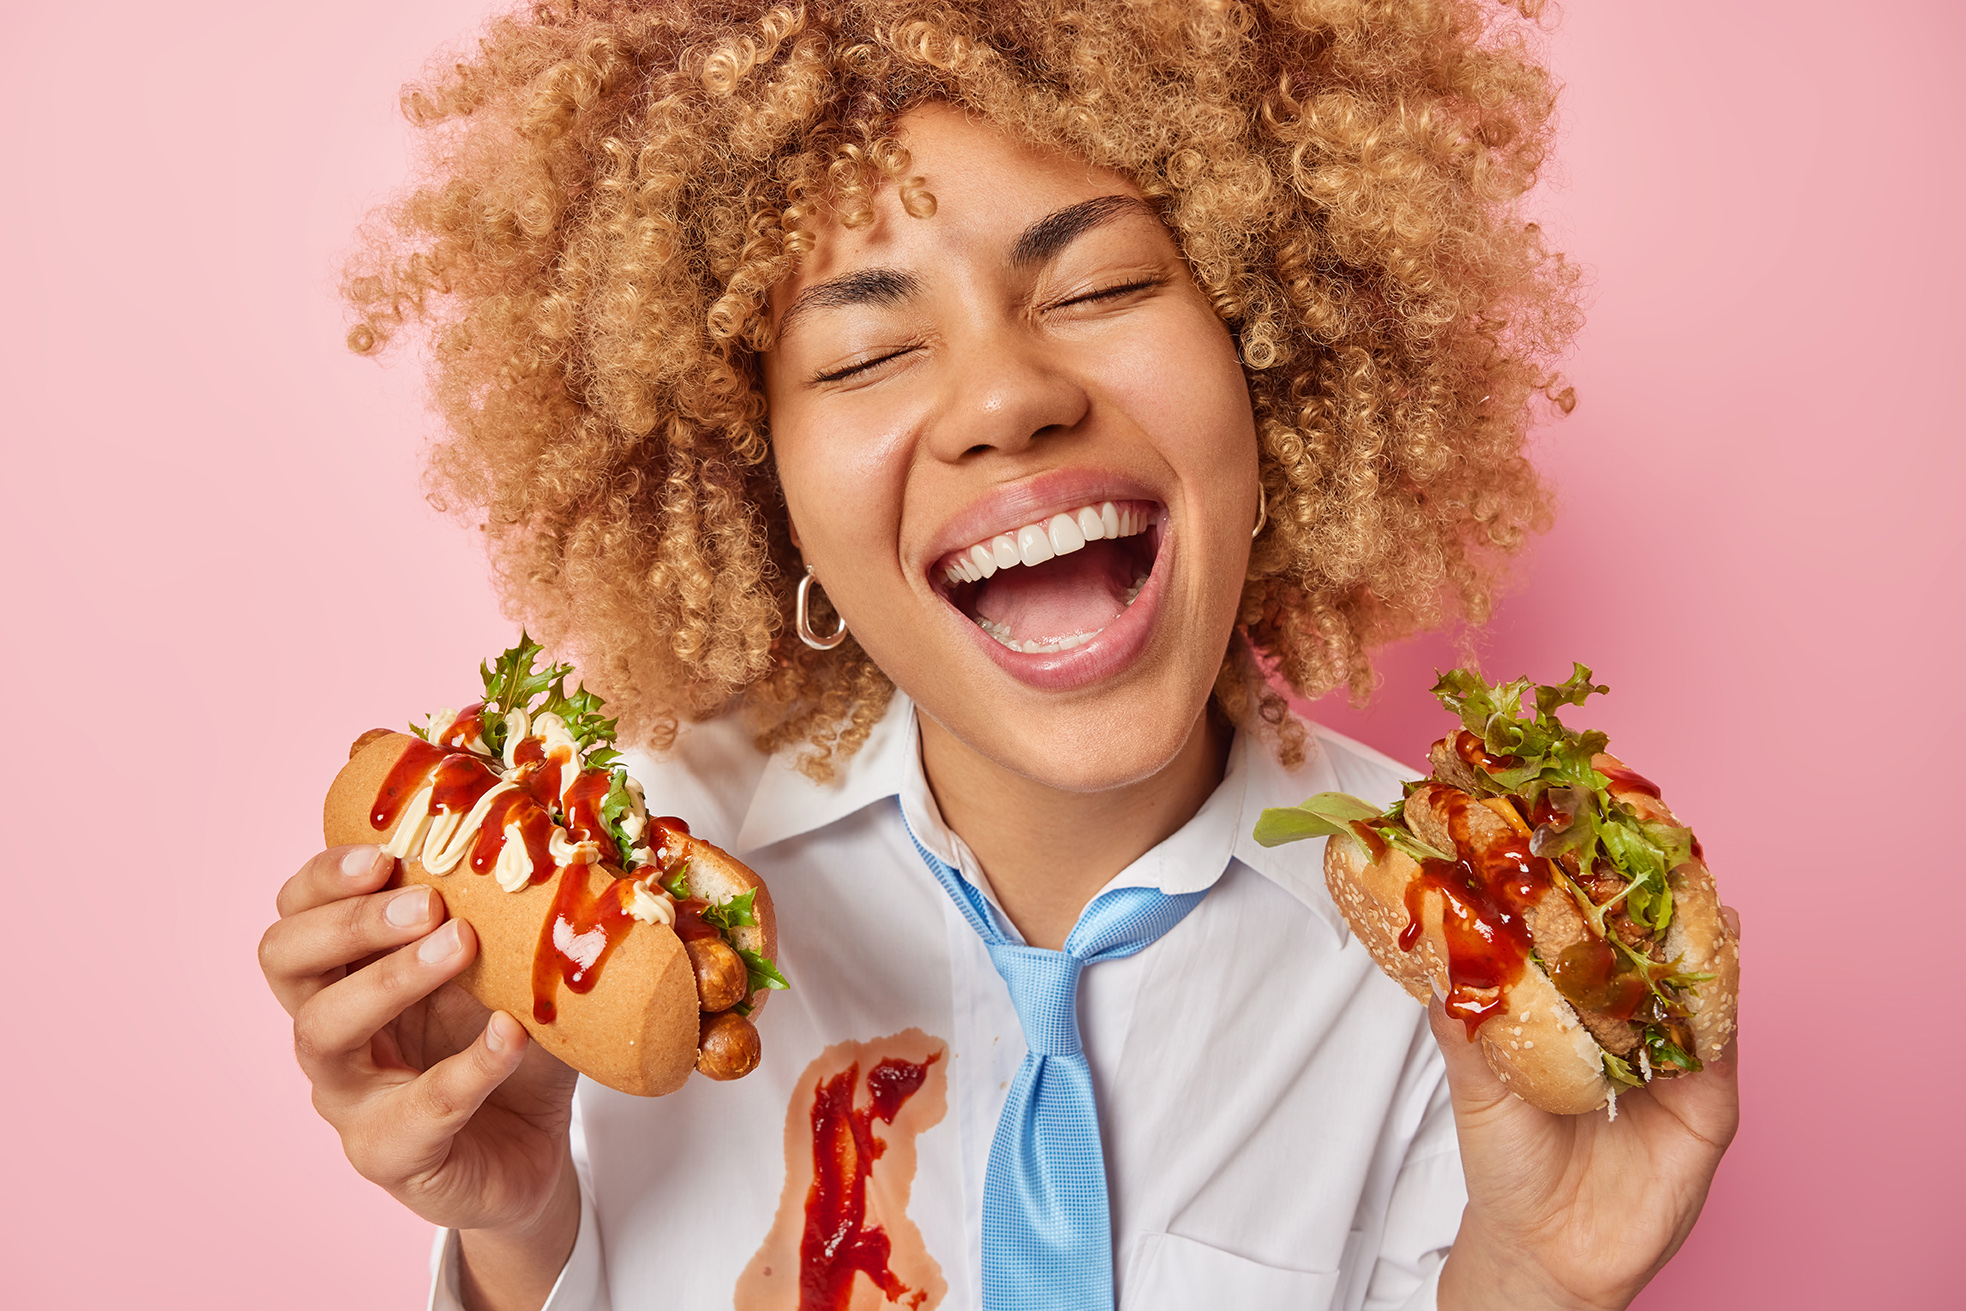 woman eating hot dog